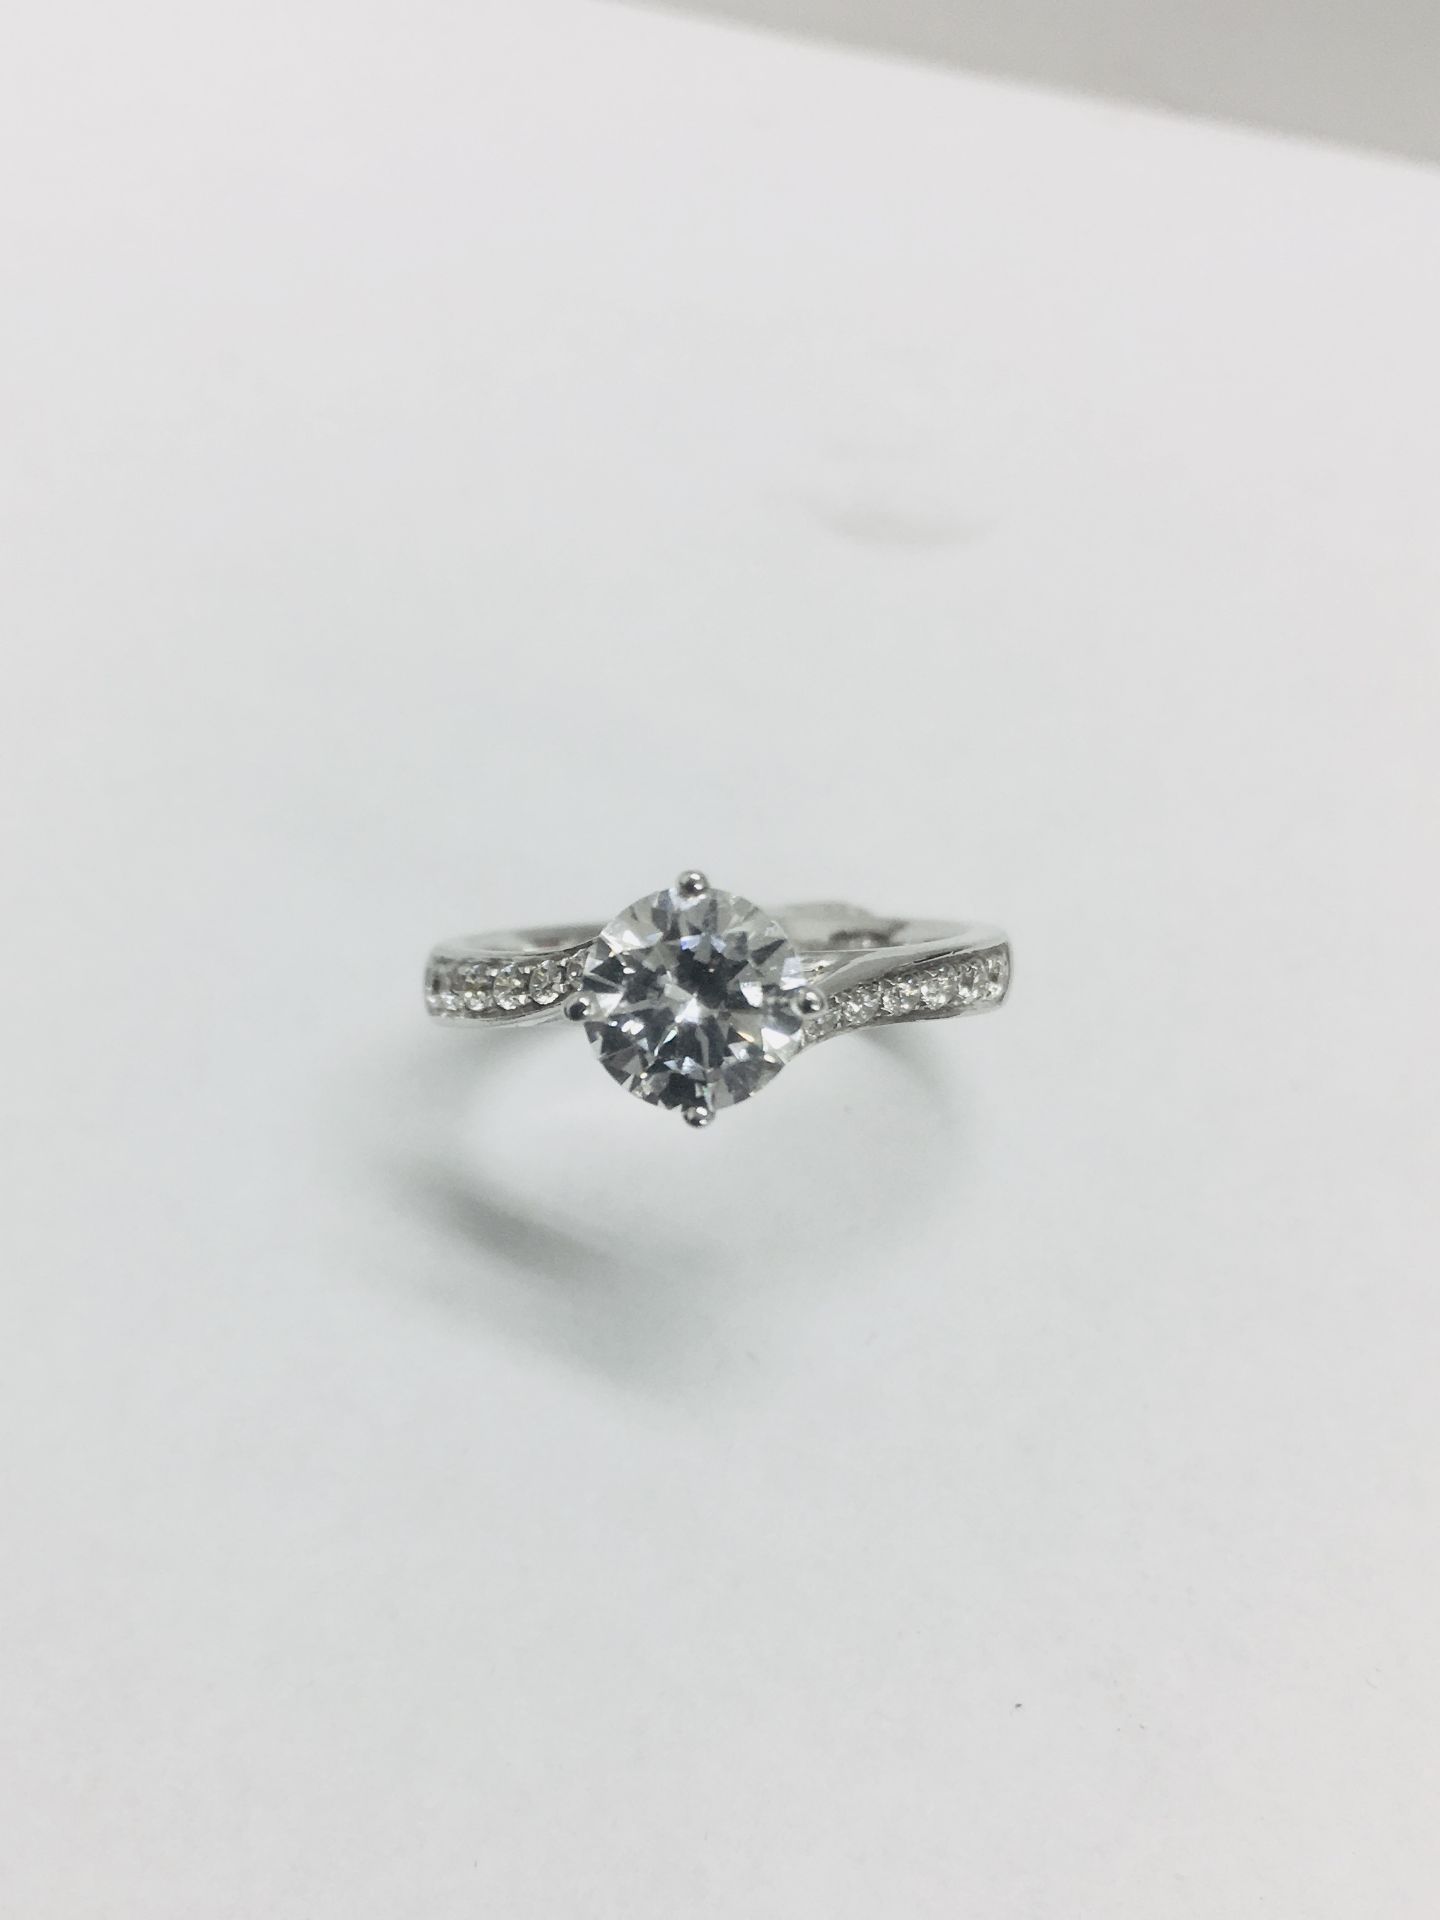 Platinum twist diamond solitaire ring,0.50ct brilliant cut diamond,h colour vs clarity - Image 5 of 6